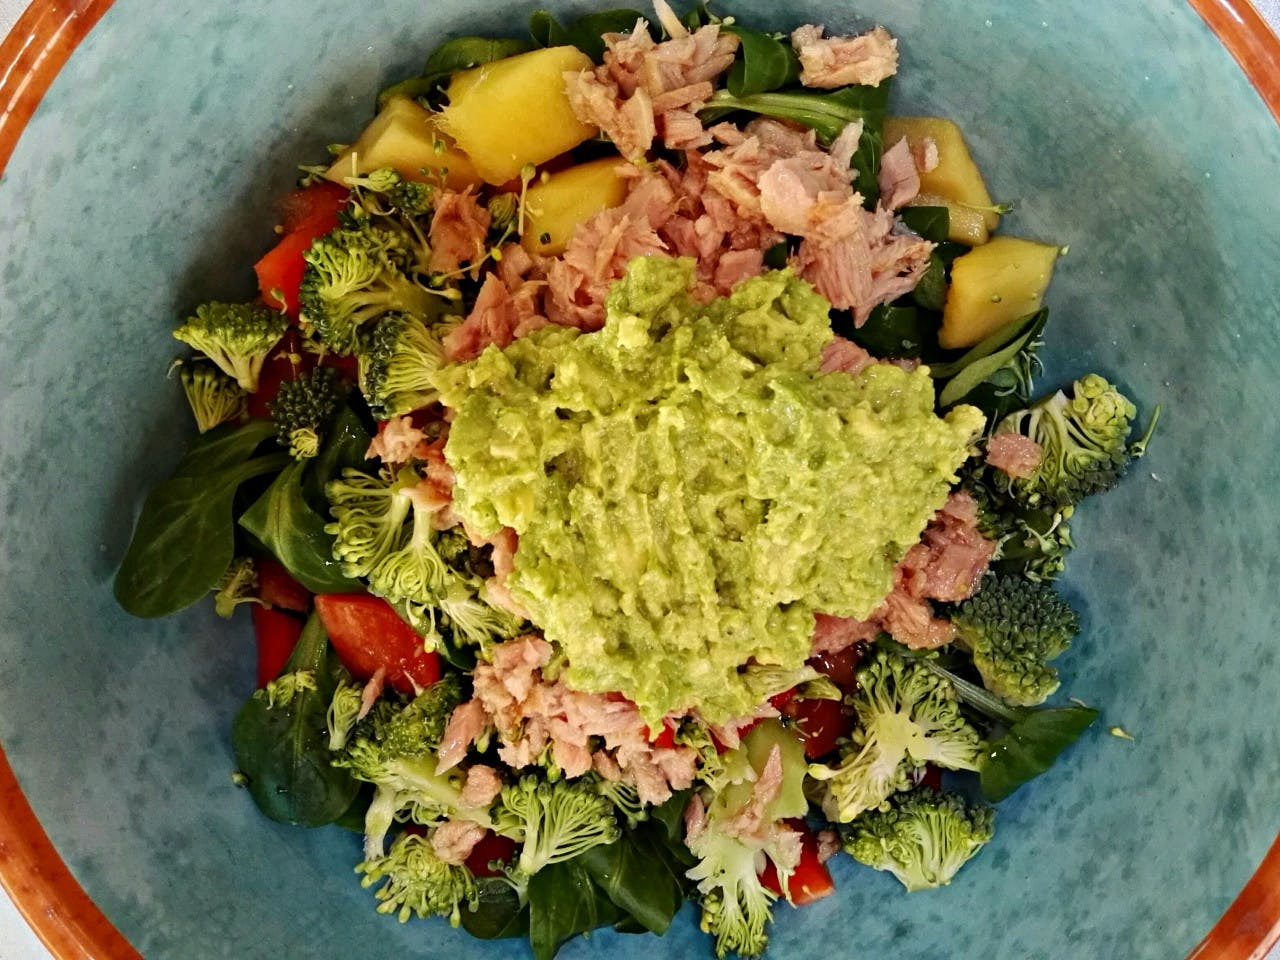 Creamy tuna salad with broccoli and grated lemon